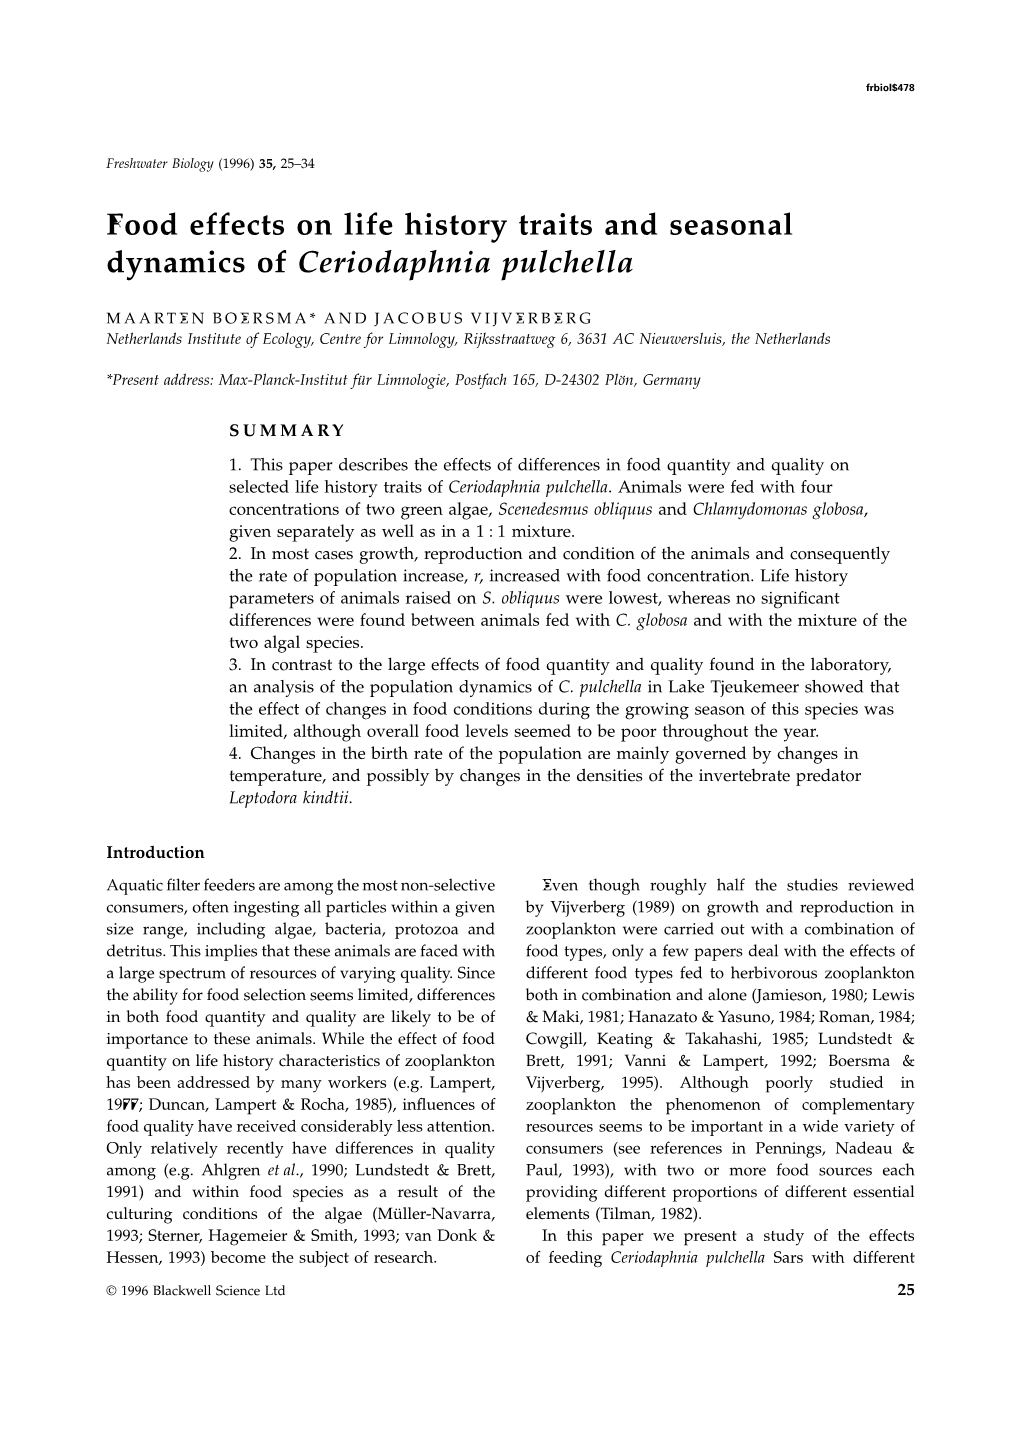 Food Effects on Life History Traits and Seasonal Dynamics of Ceriodaphnia Pulchella